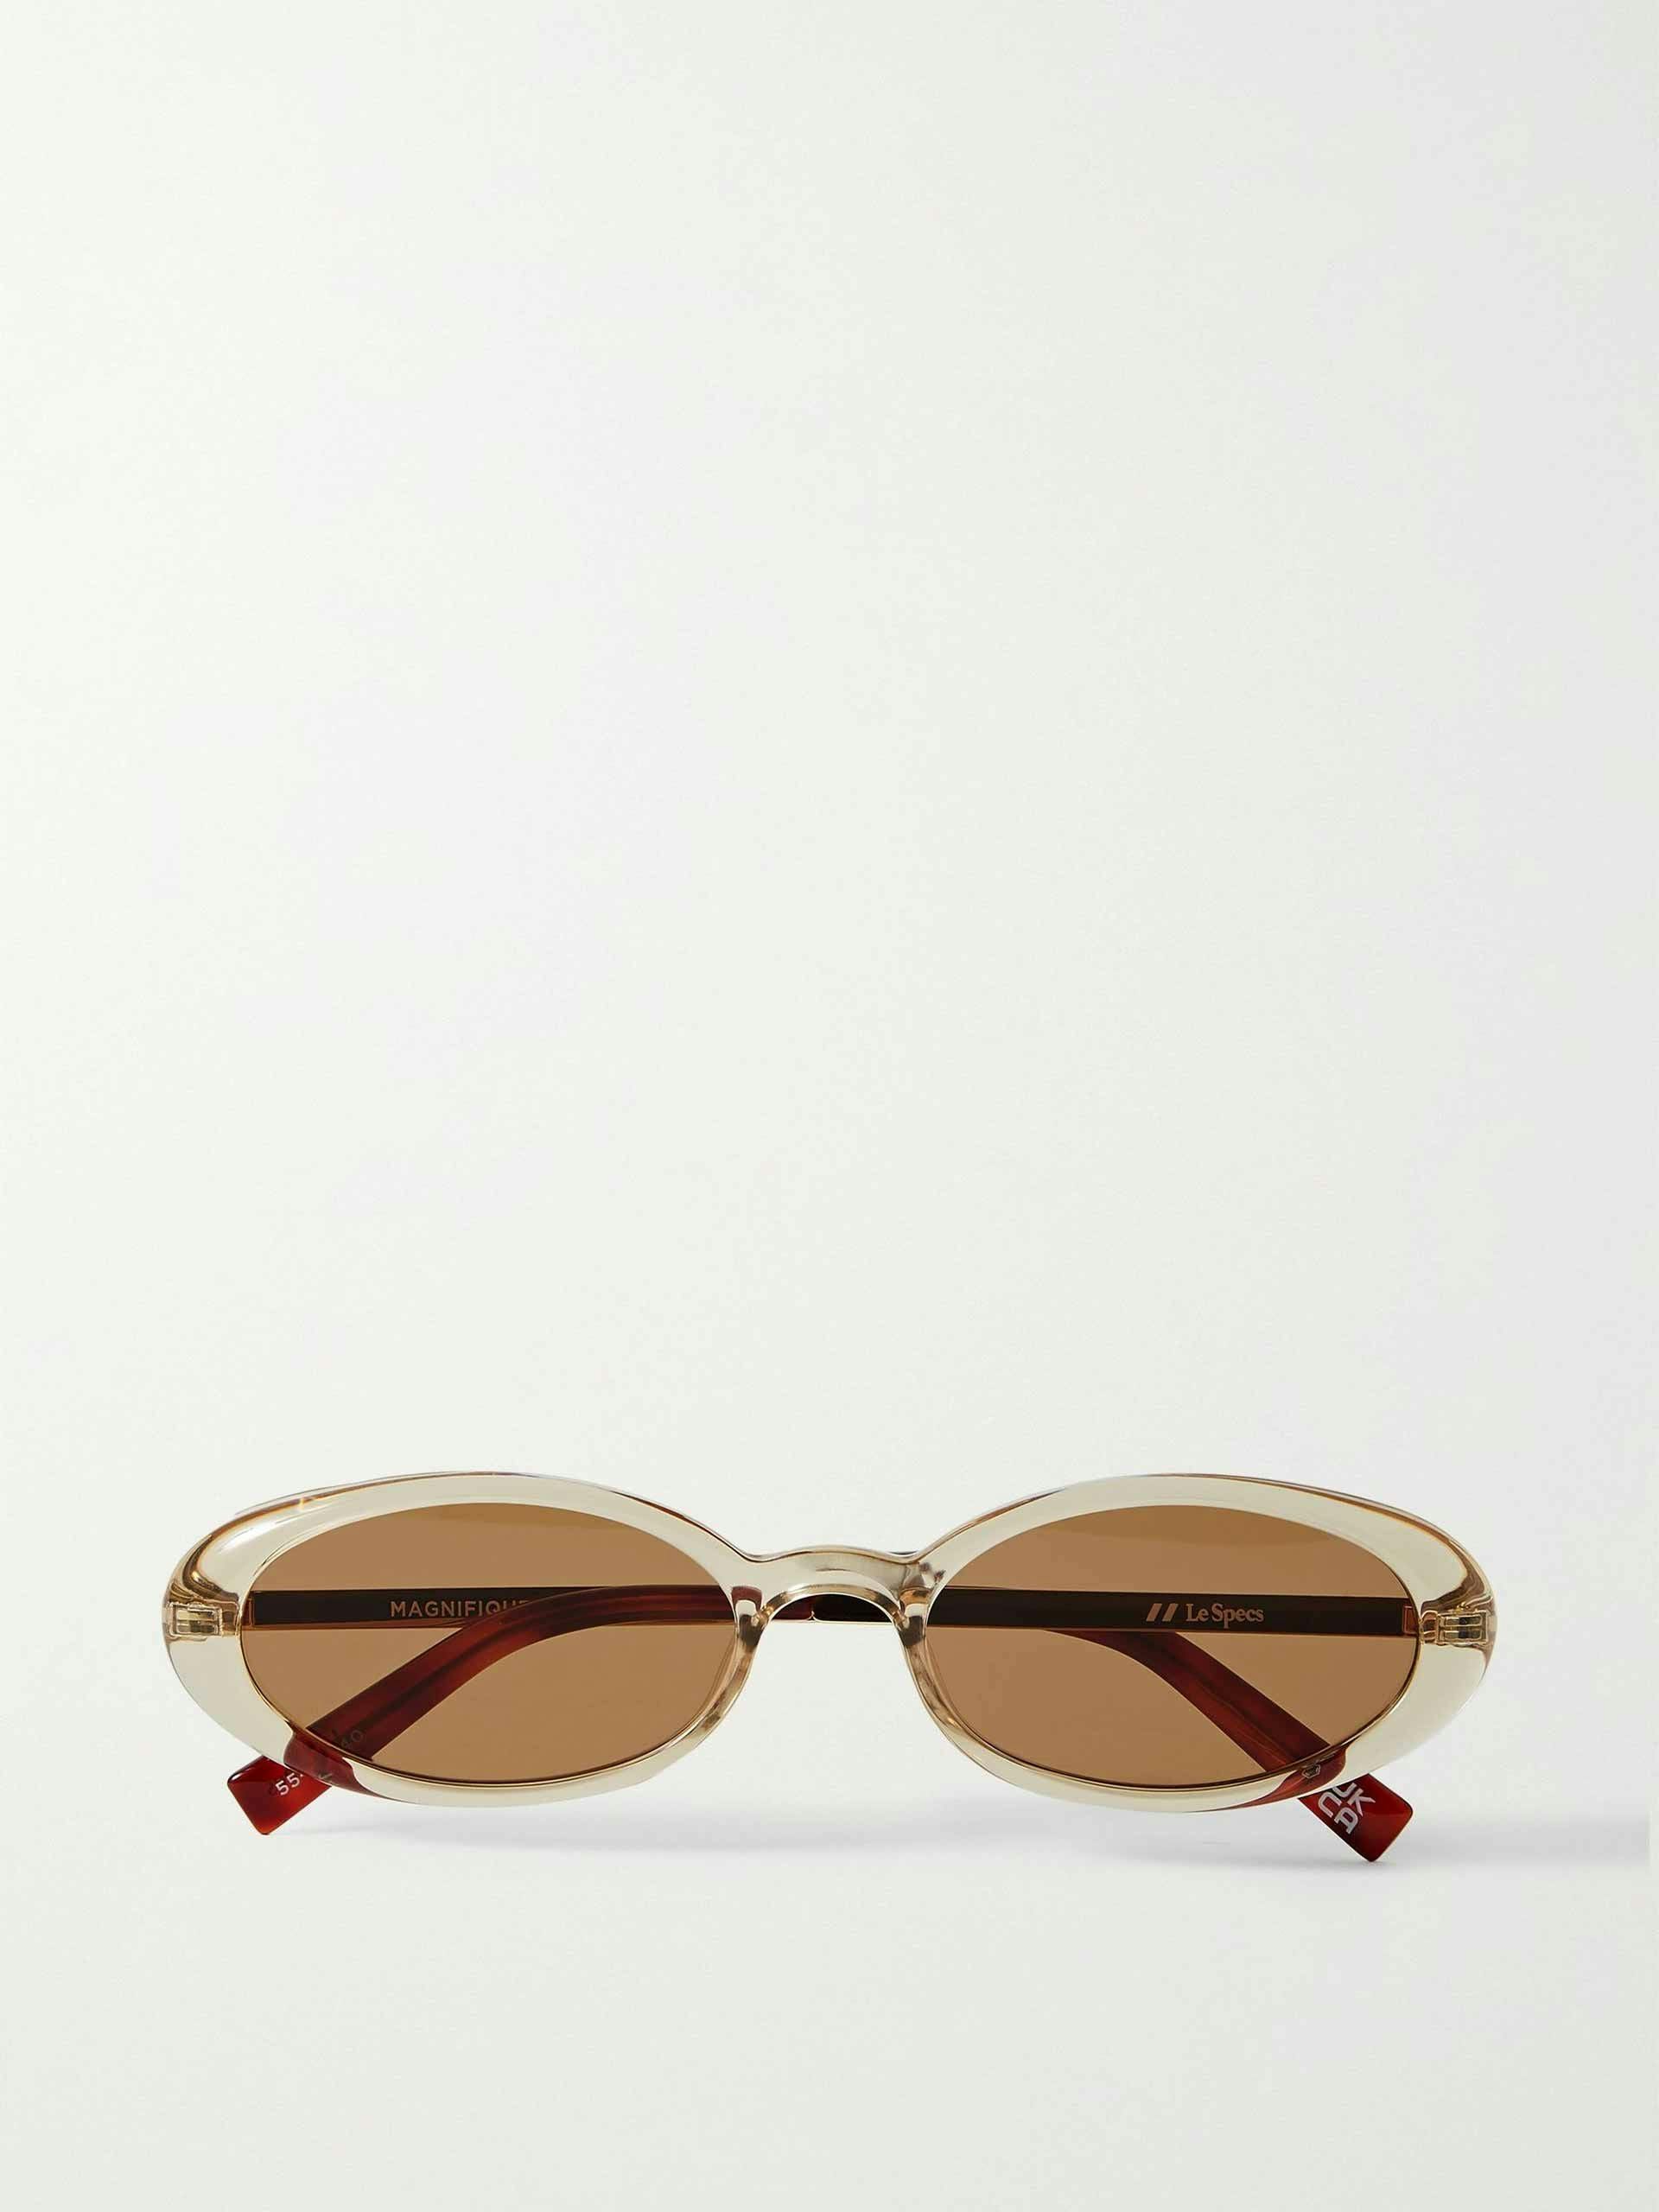 Magnifique oval-frame acetate and gold-tone sunglasses